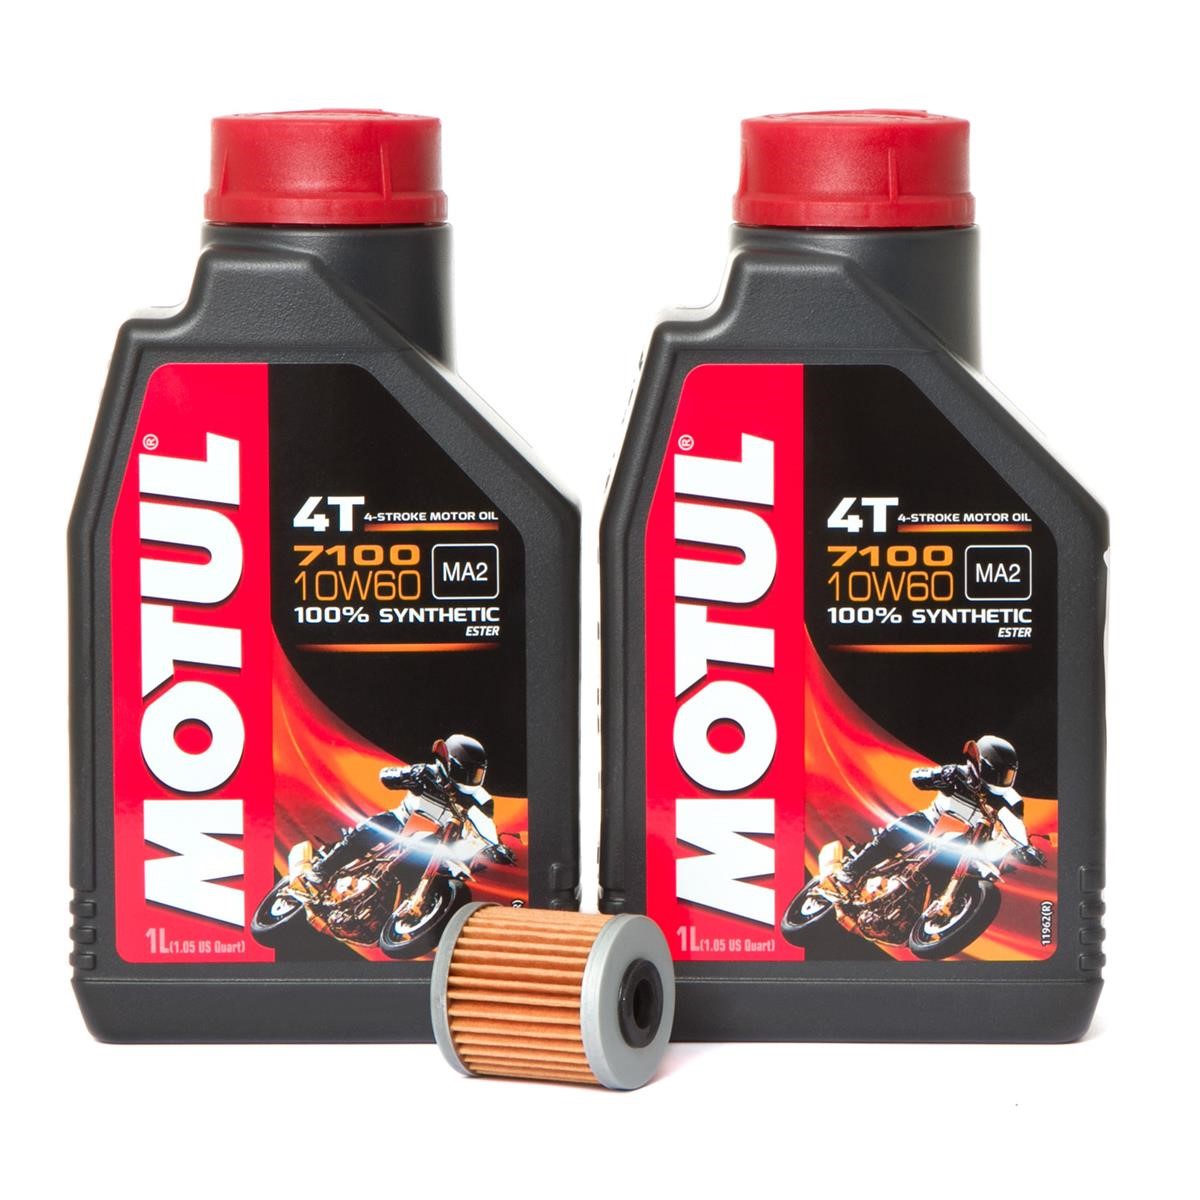 Motul Motorenöl-Set 10W60 inkl. Ölfilter für GasGas, Honda, Kawasaki